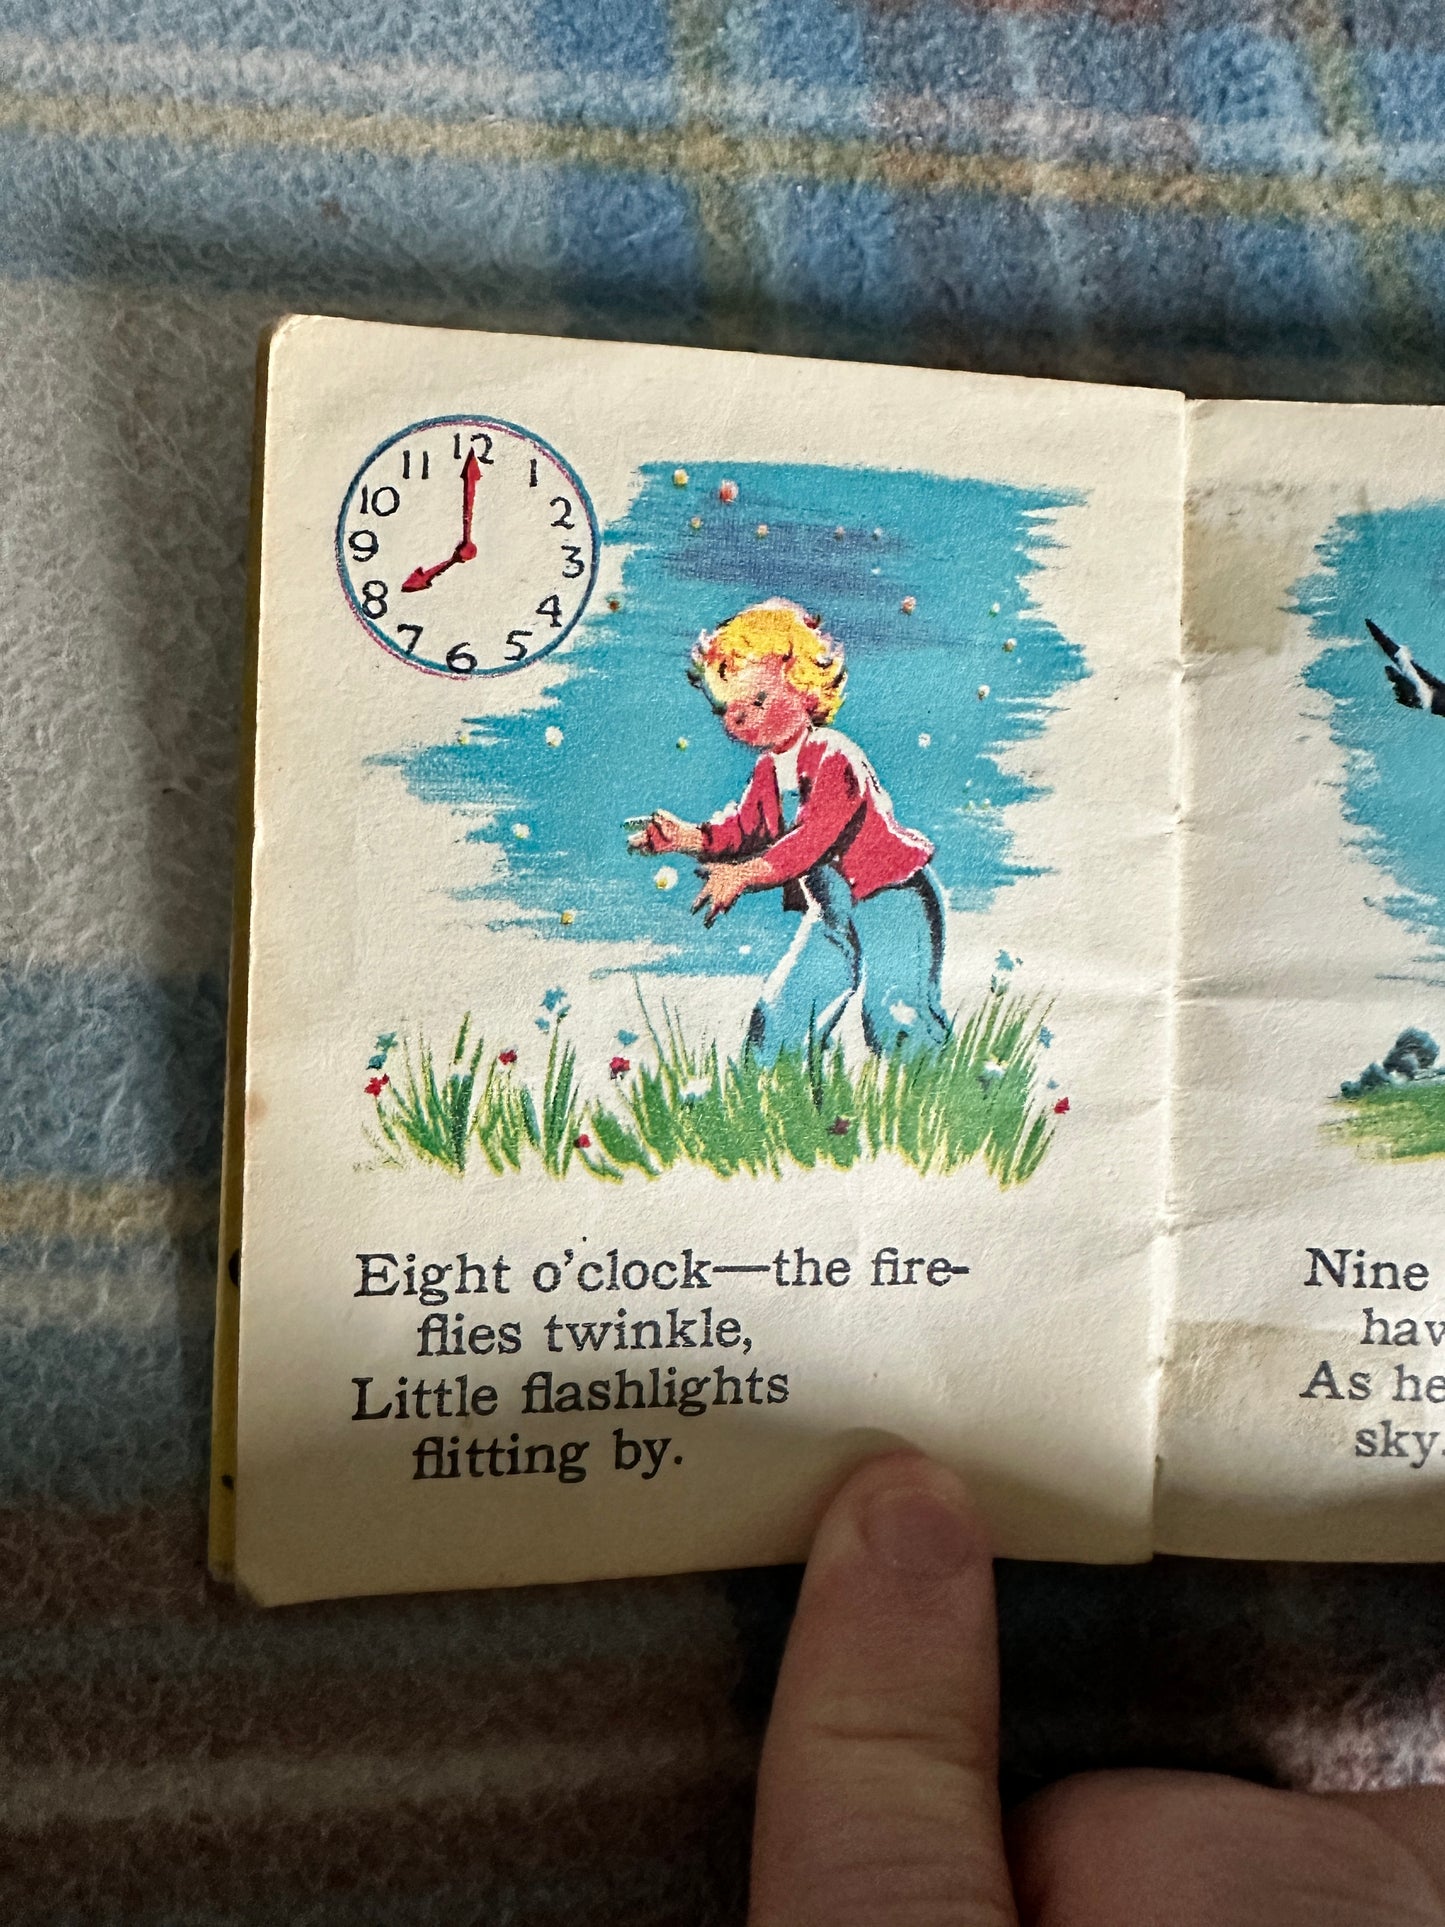 1930’s Telling Time(Tiny Tales) Alison Cummings(Raphael Tuck & Sons Ltd)